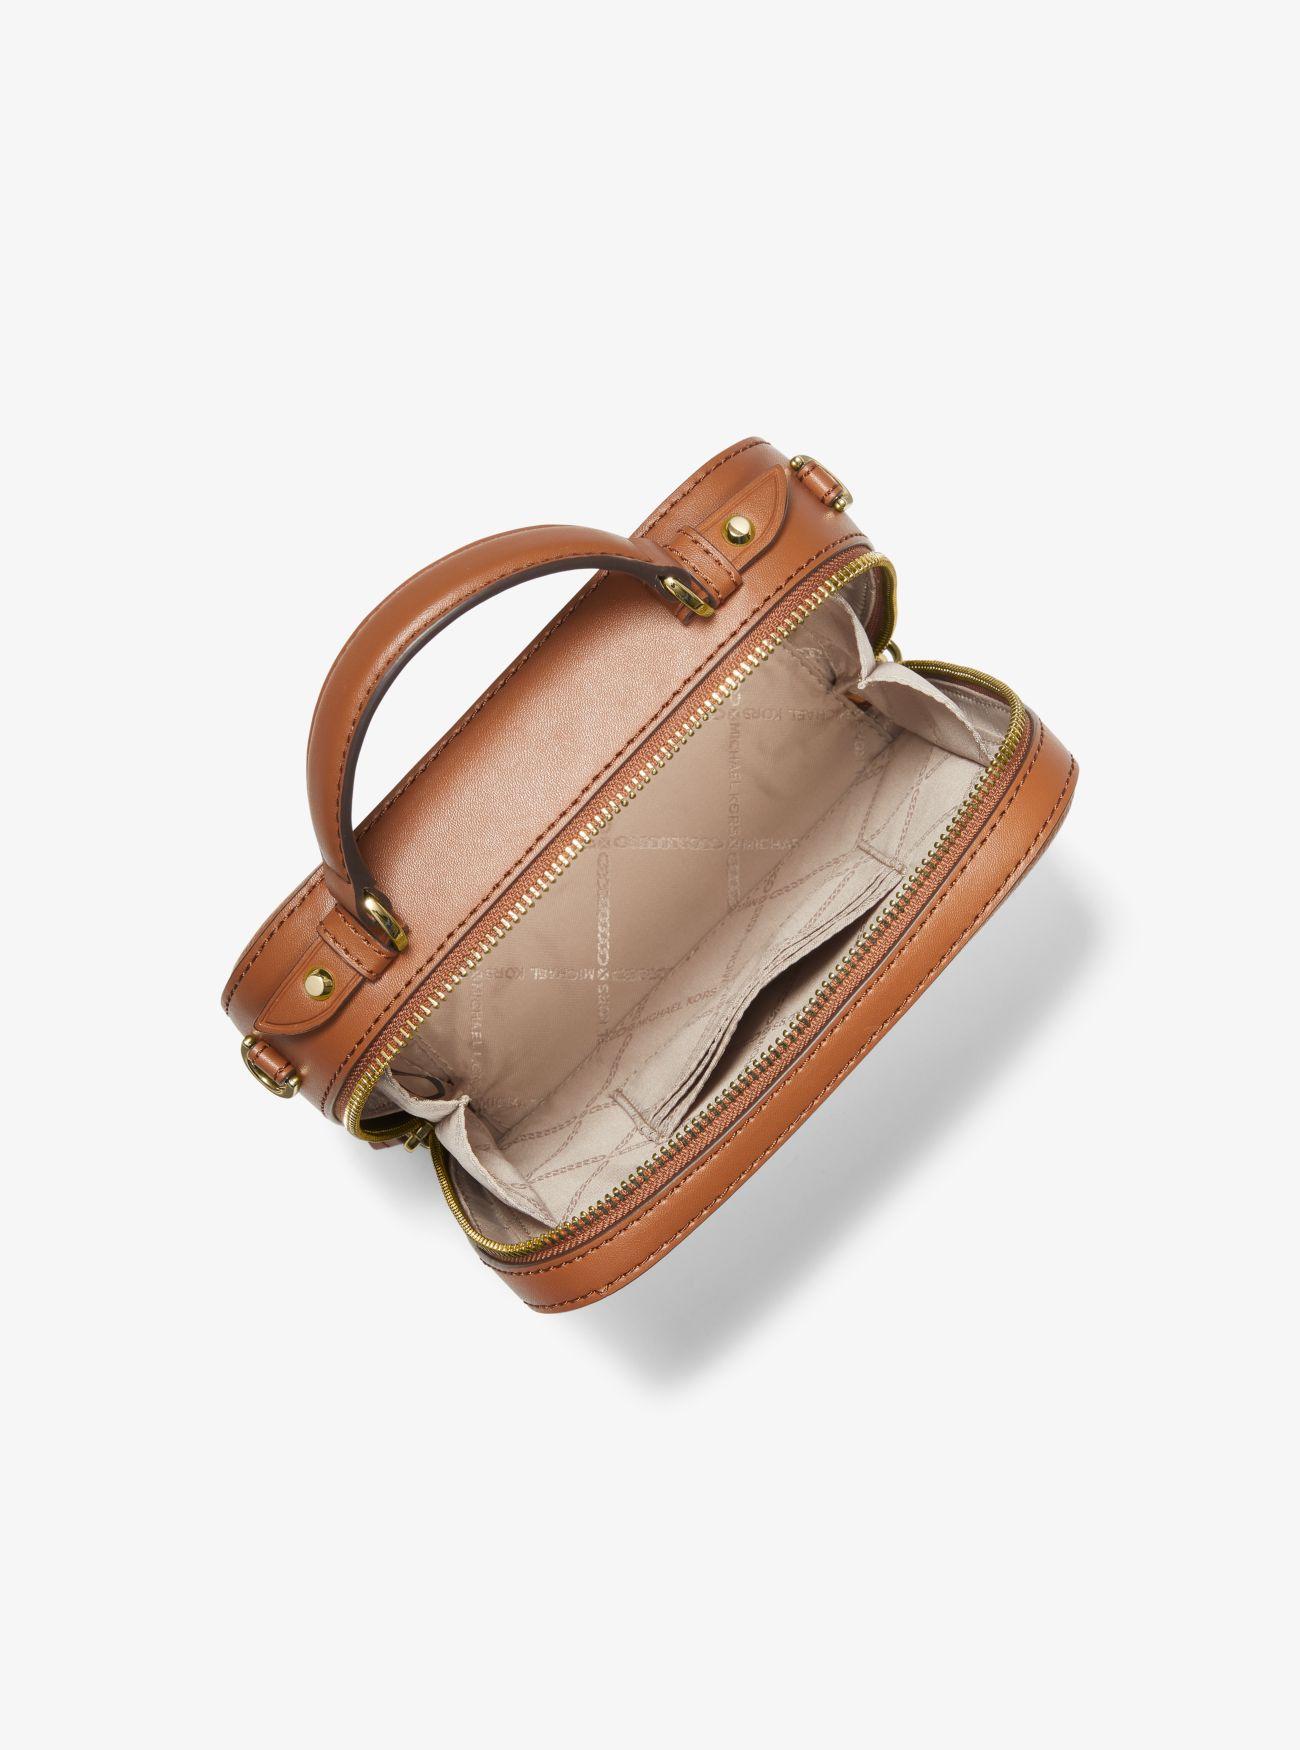 Jet set leather handbag Michael Kors Brown in Leather - 35793258